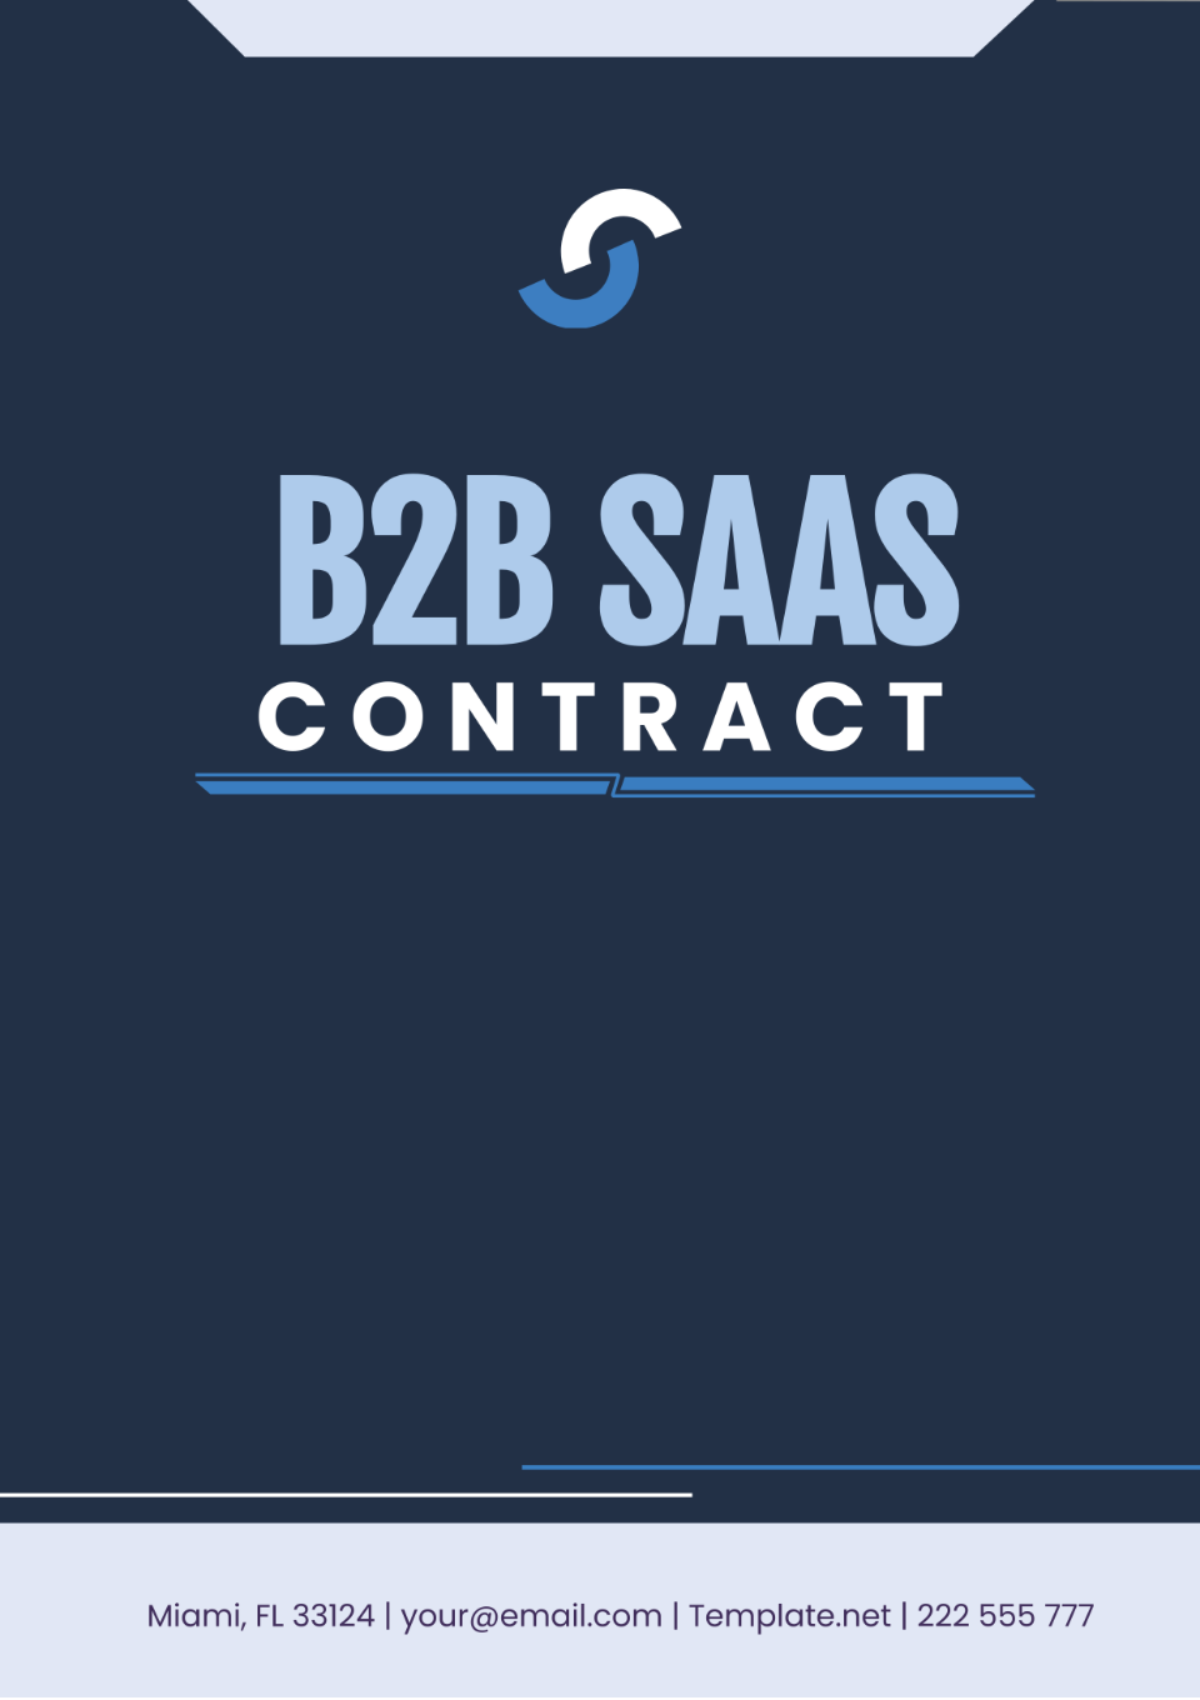 Free B2B SaaS Contract Template